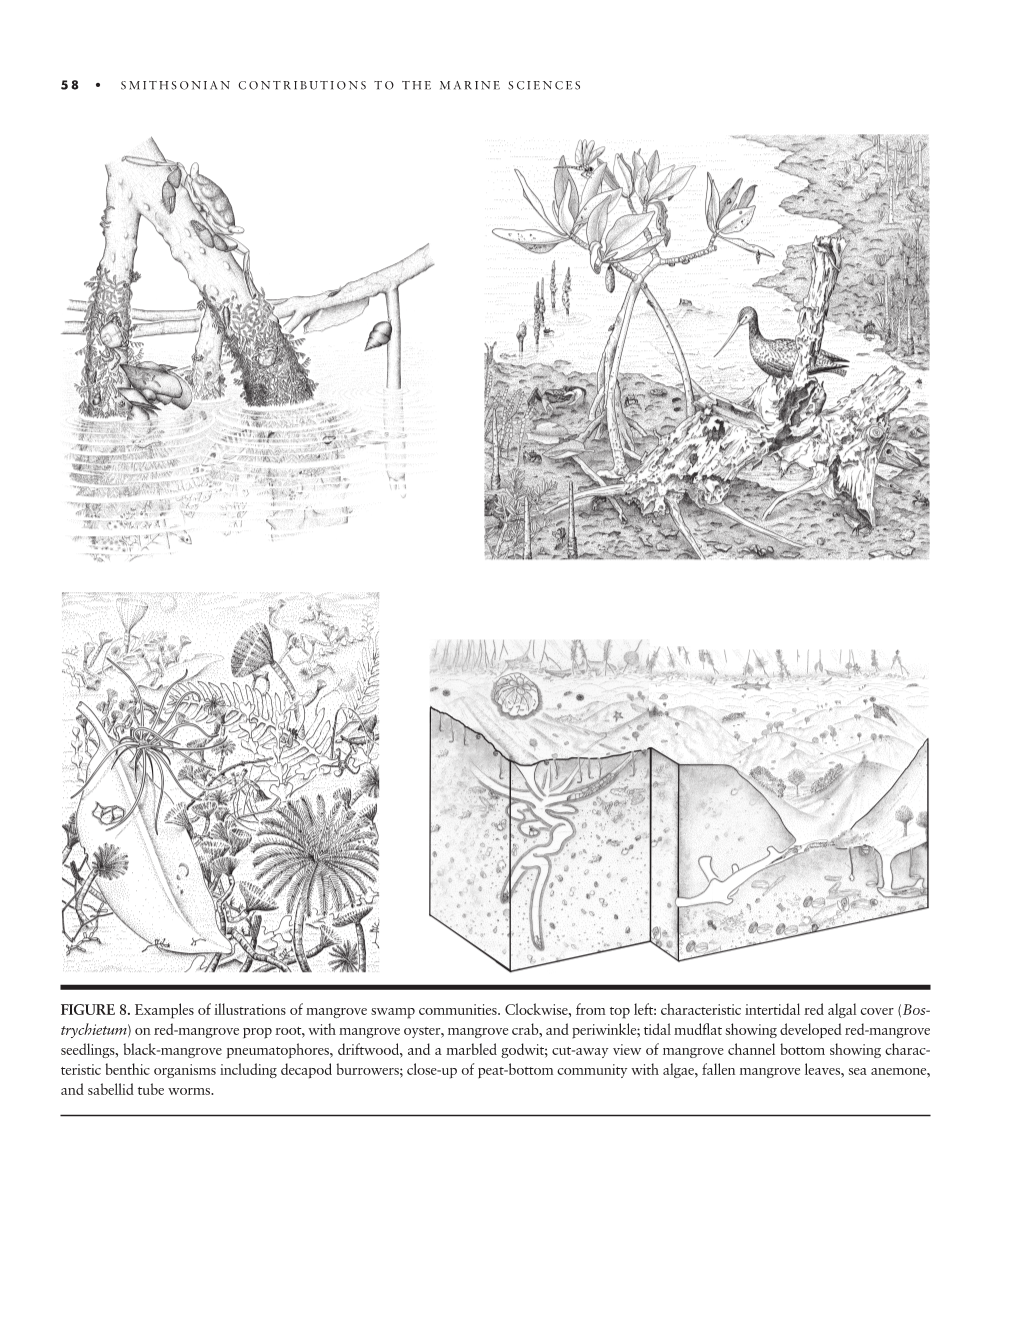 FIGURE 8. Examples of Illustrations of Mangrove Swamp Communities